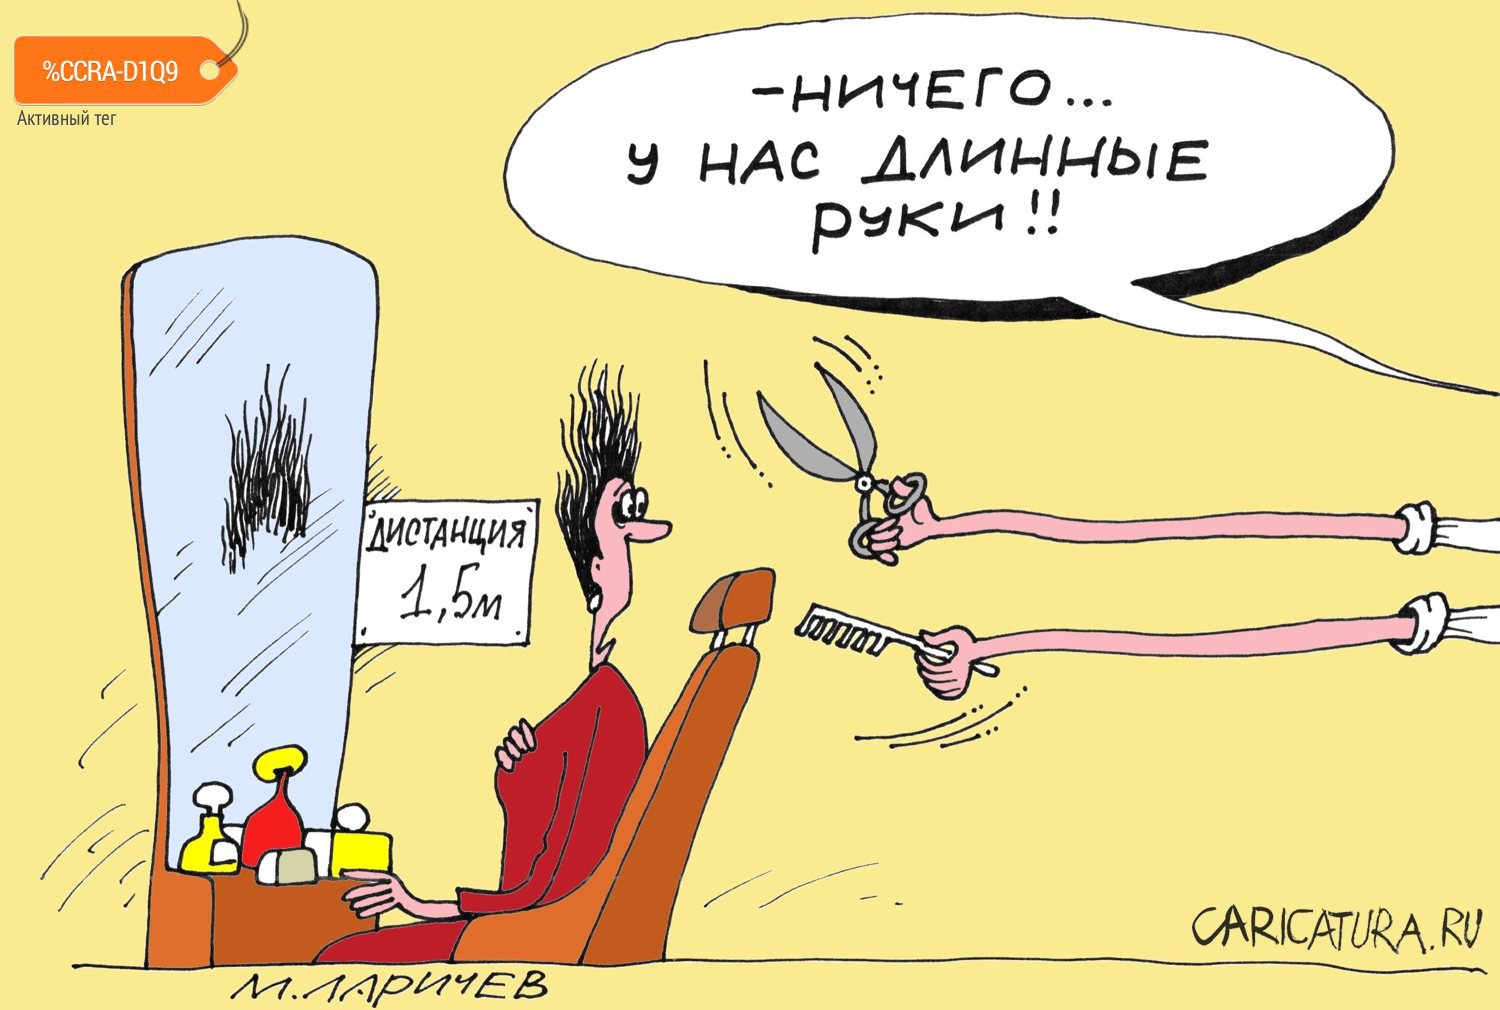 Карикатура "Дистанция", Михаил Ларичев